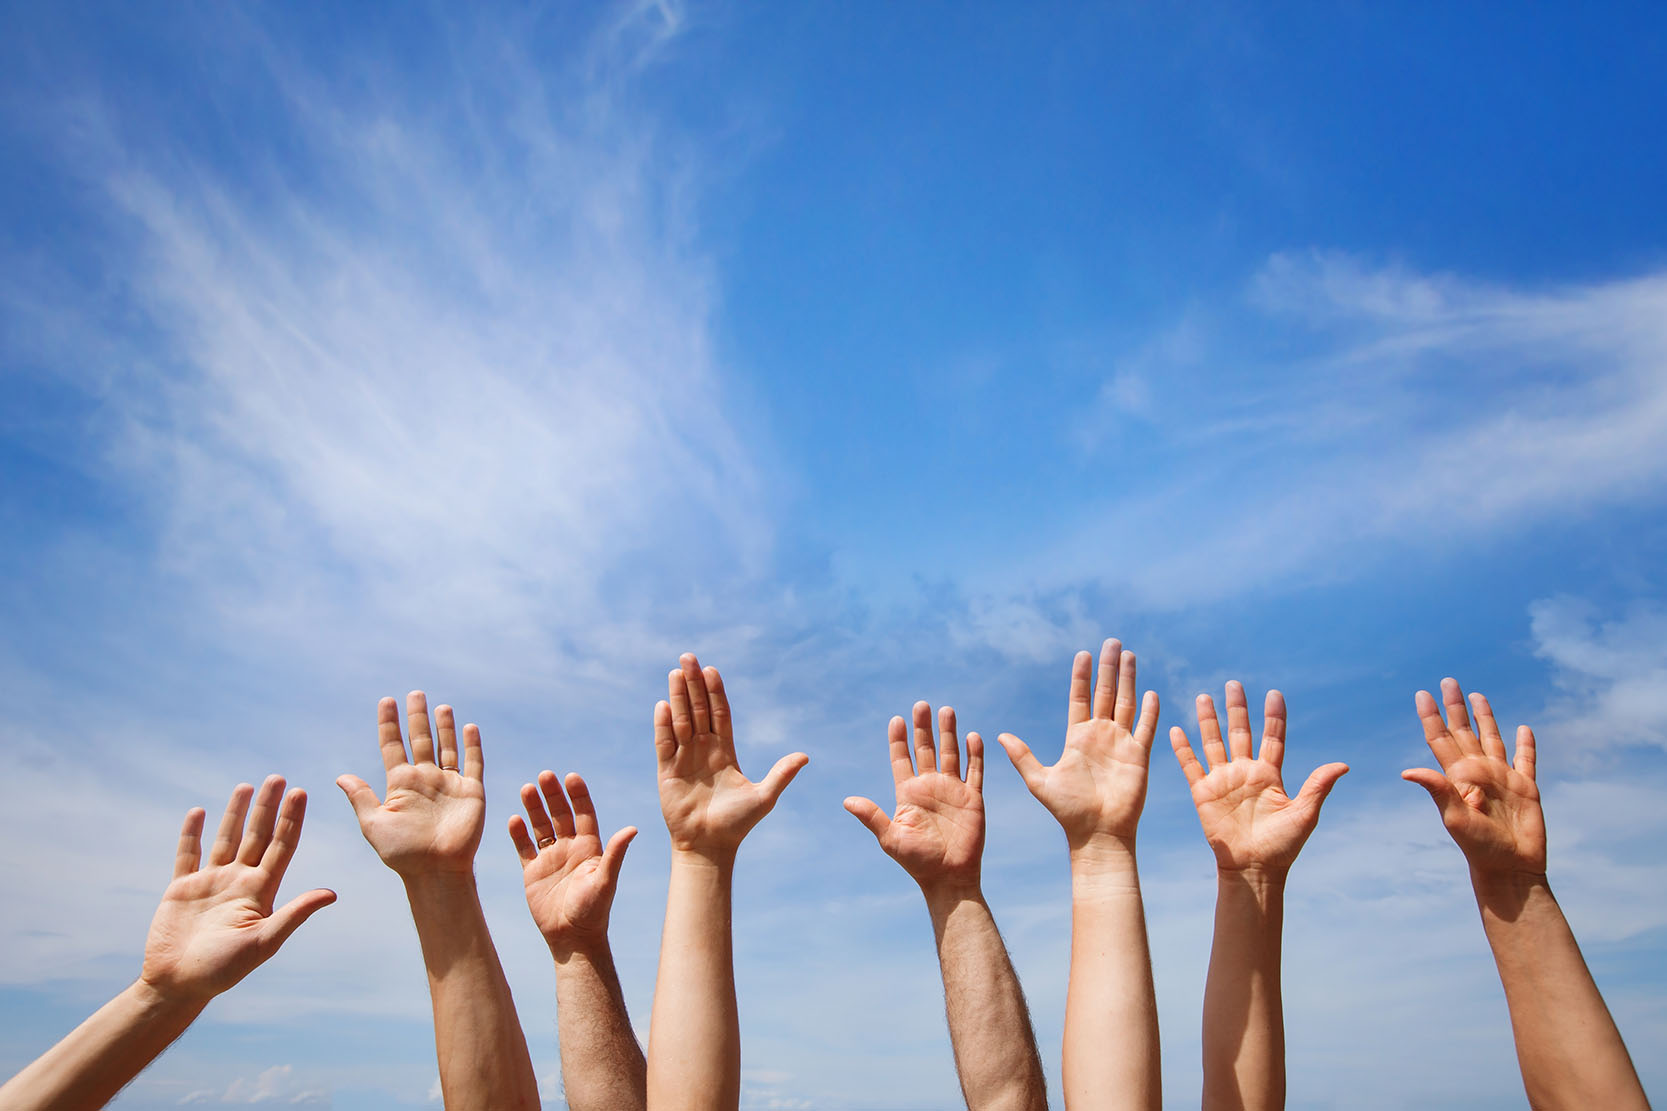 Raised hands against blue sky background